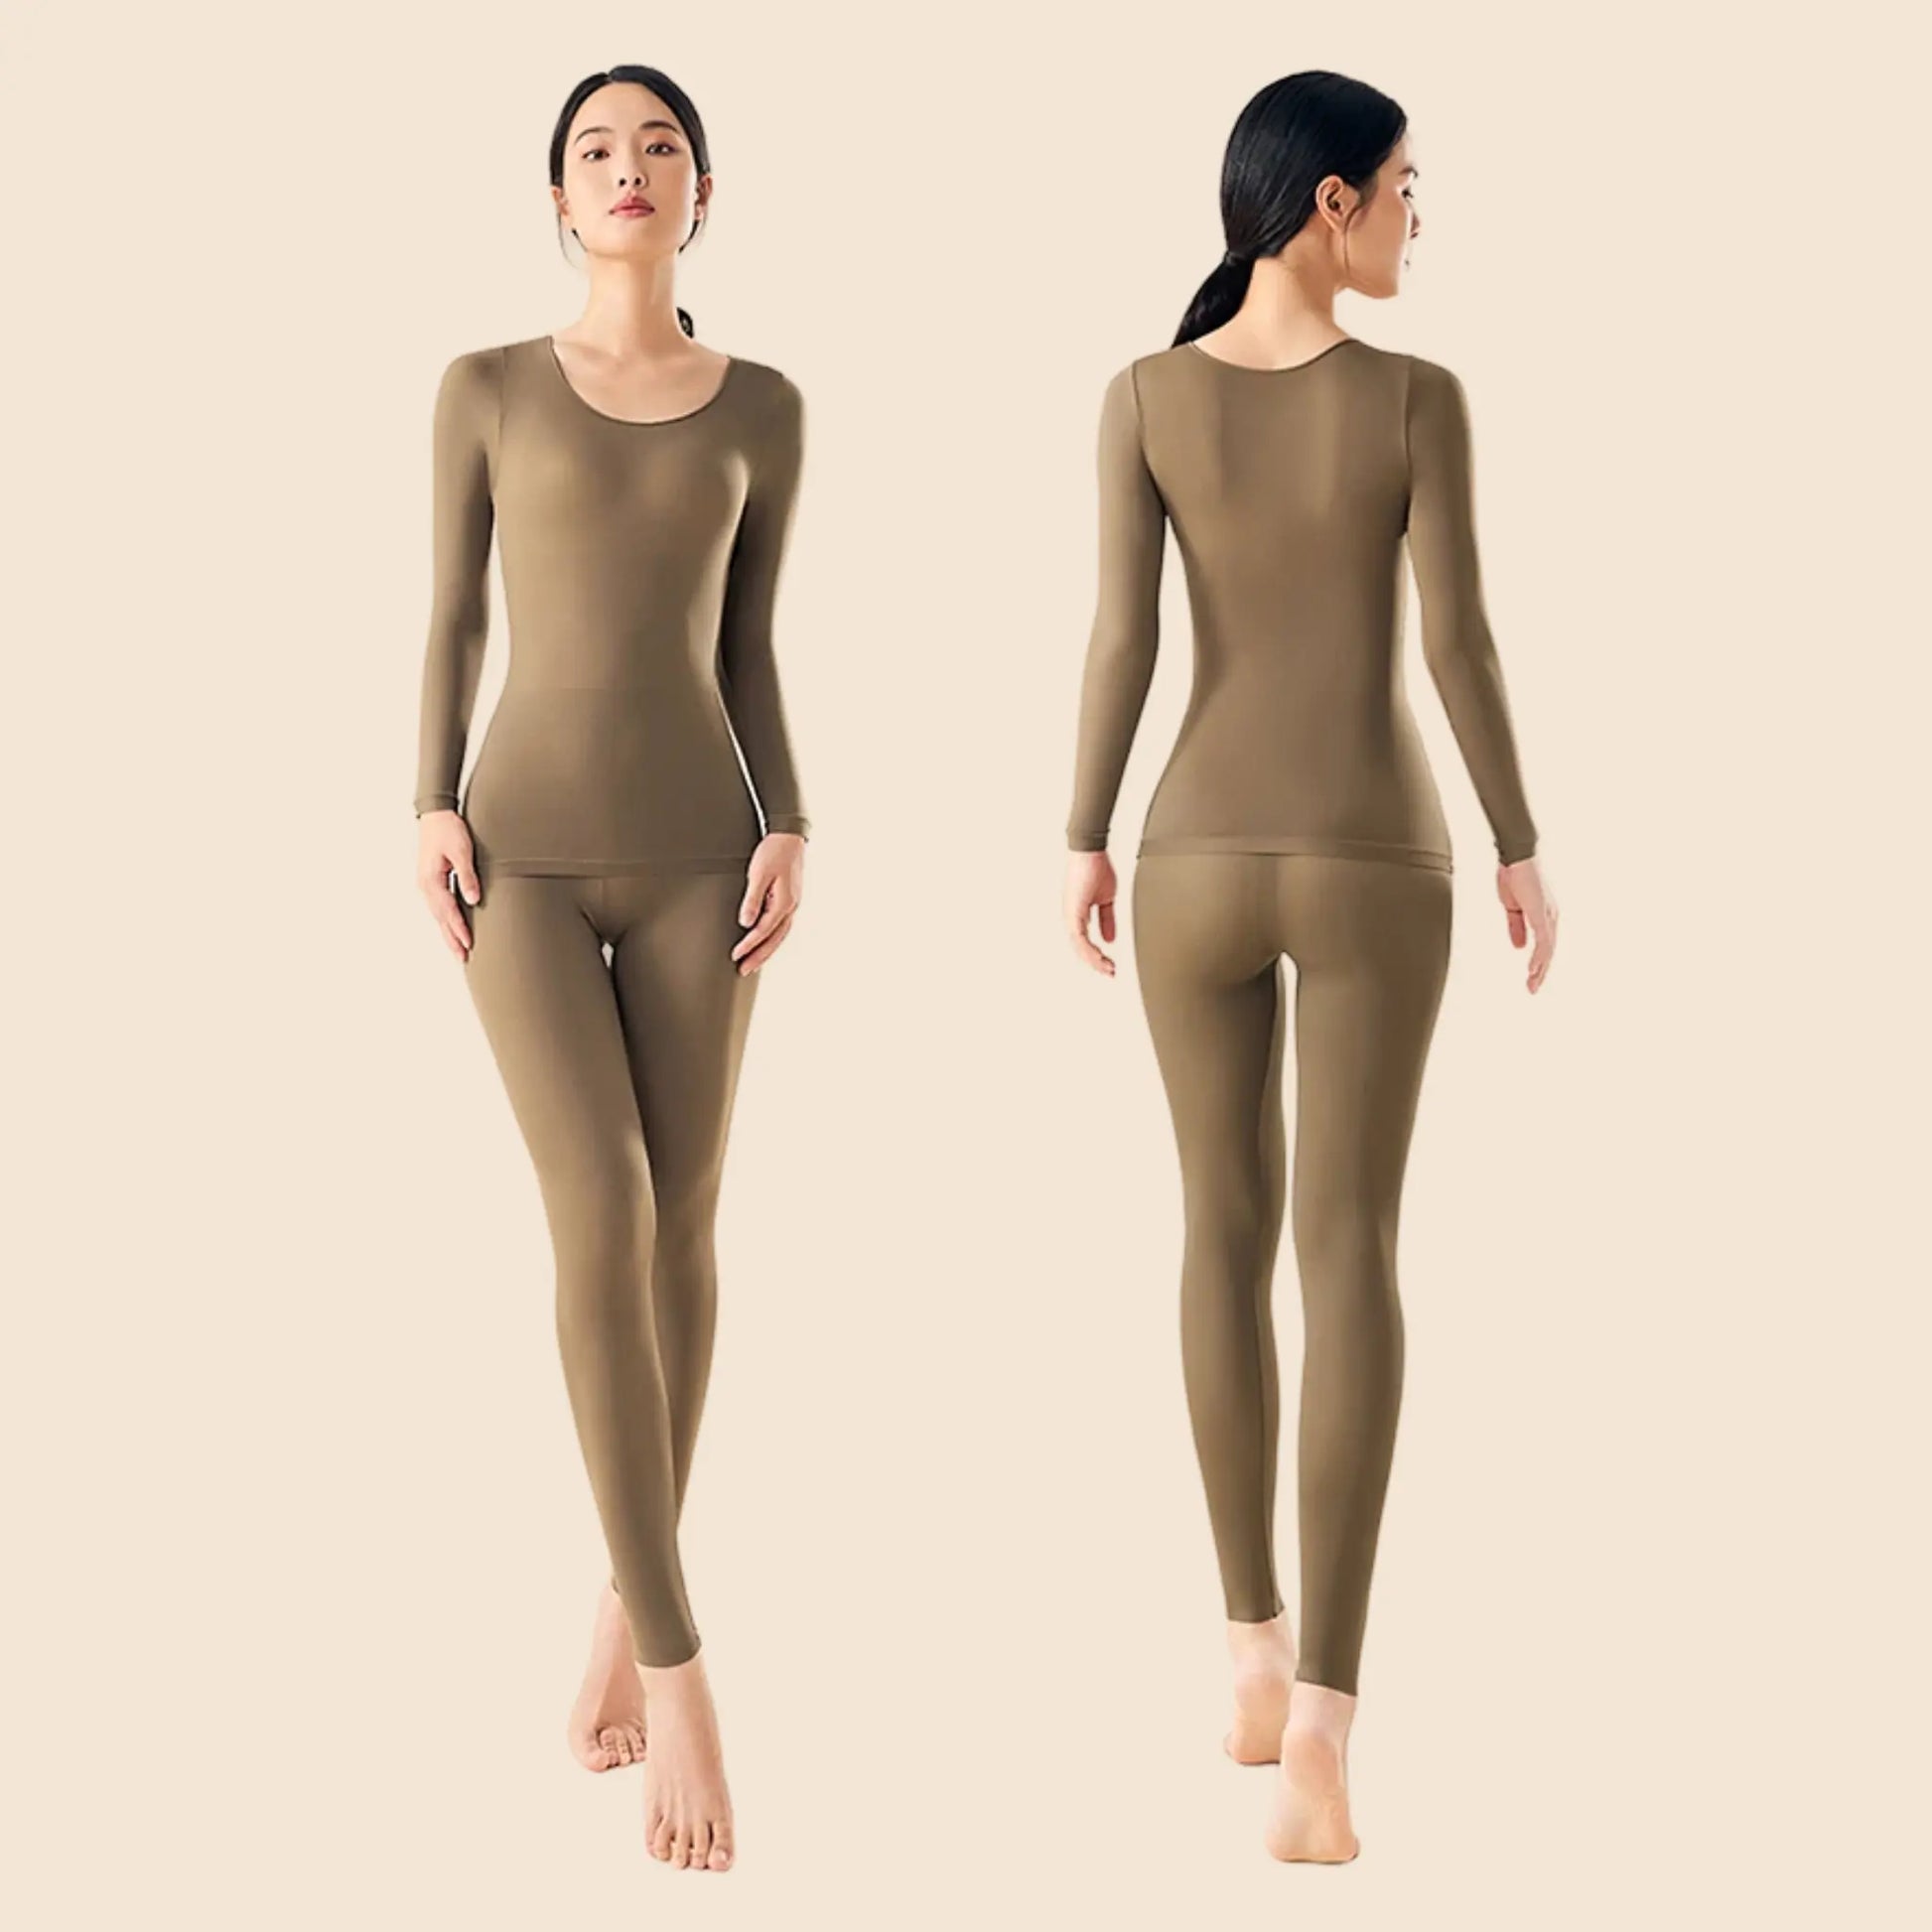 SUPER SKIN™ Ultra-thin Hyaluronic Thermal Underwear – Charlotte & Me